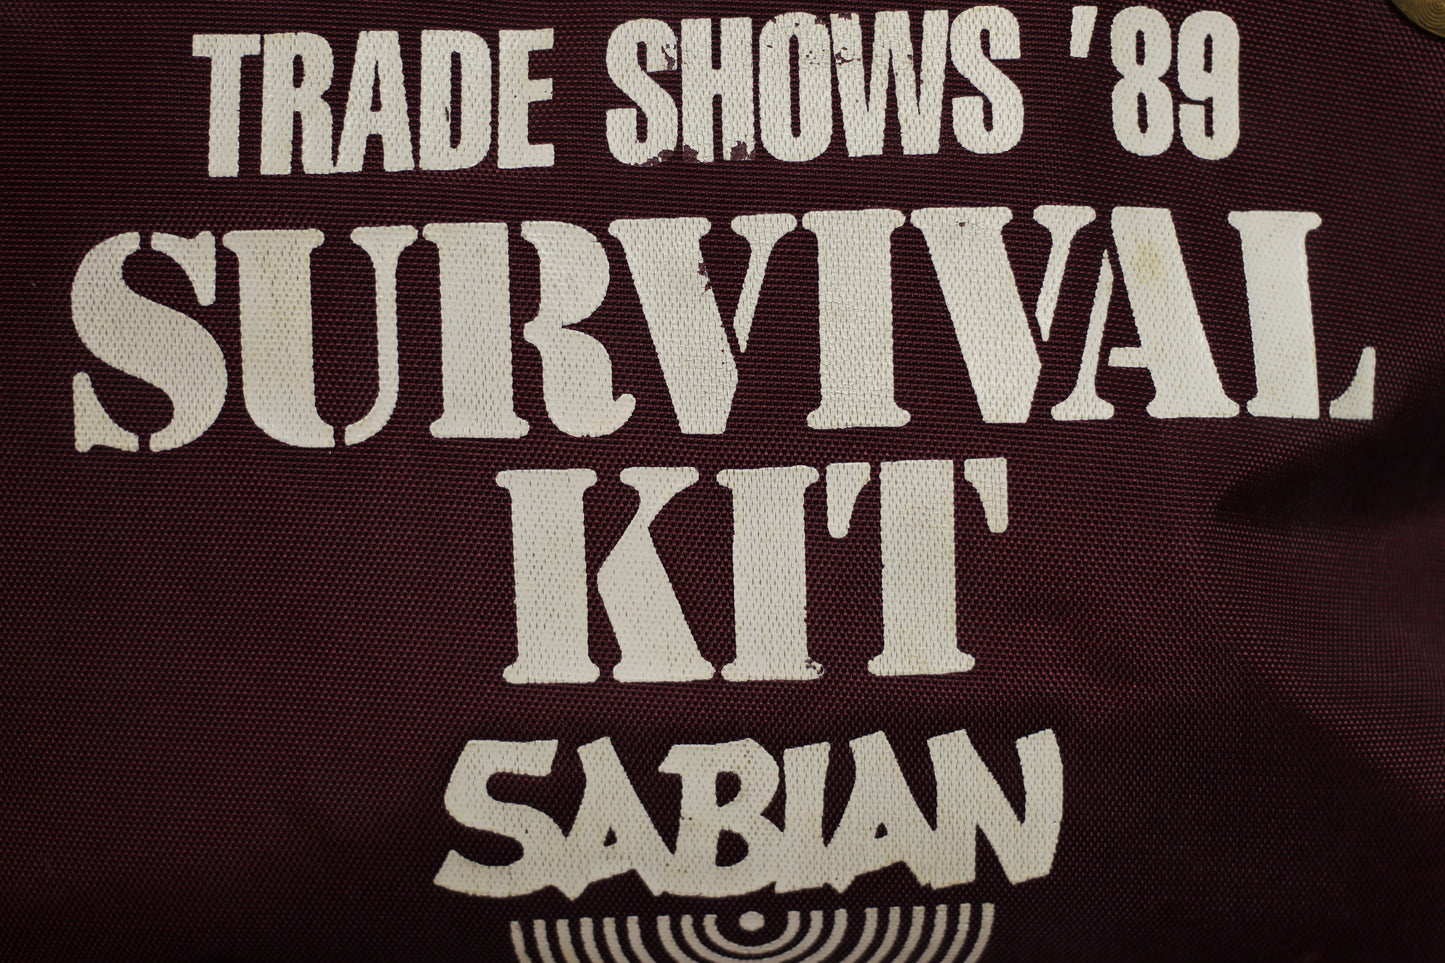 1989 Sabian Trade Shows Survival Kit Duffle Bag